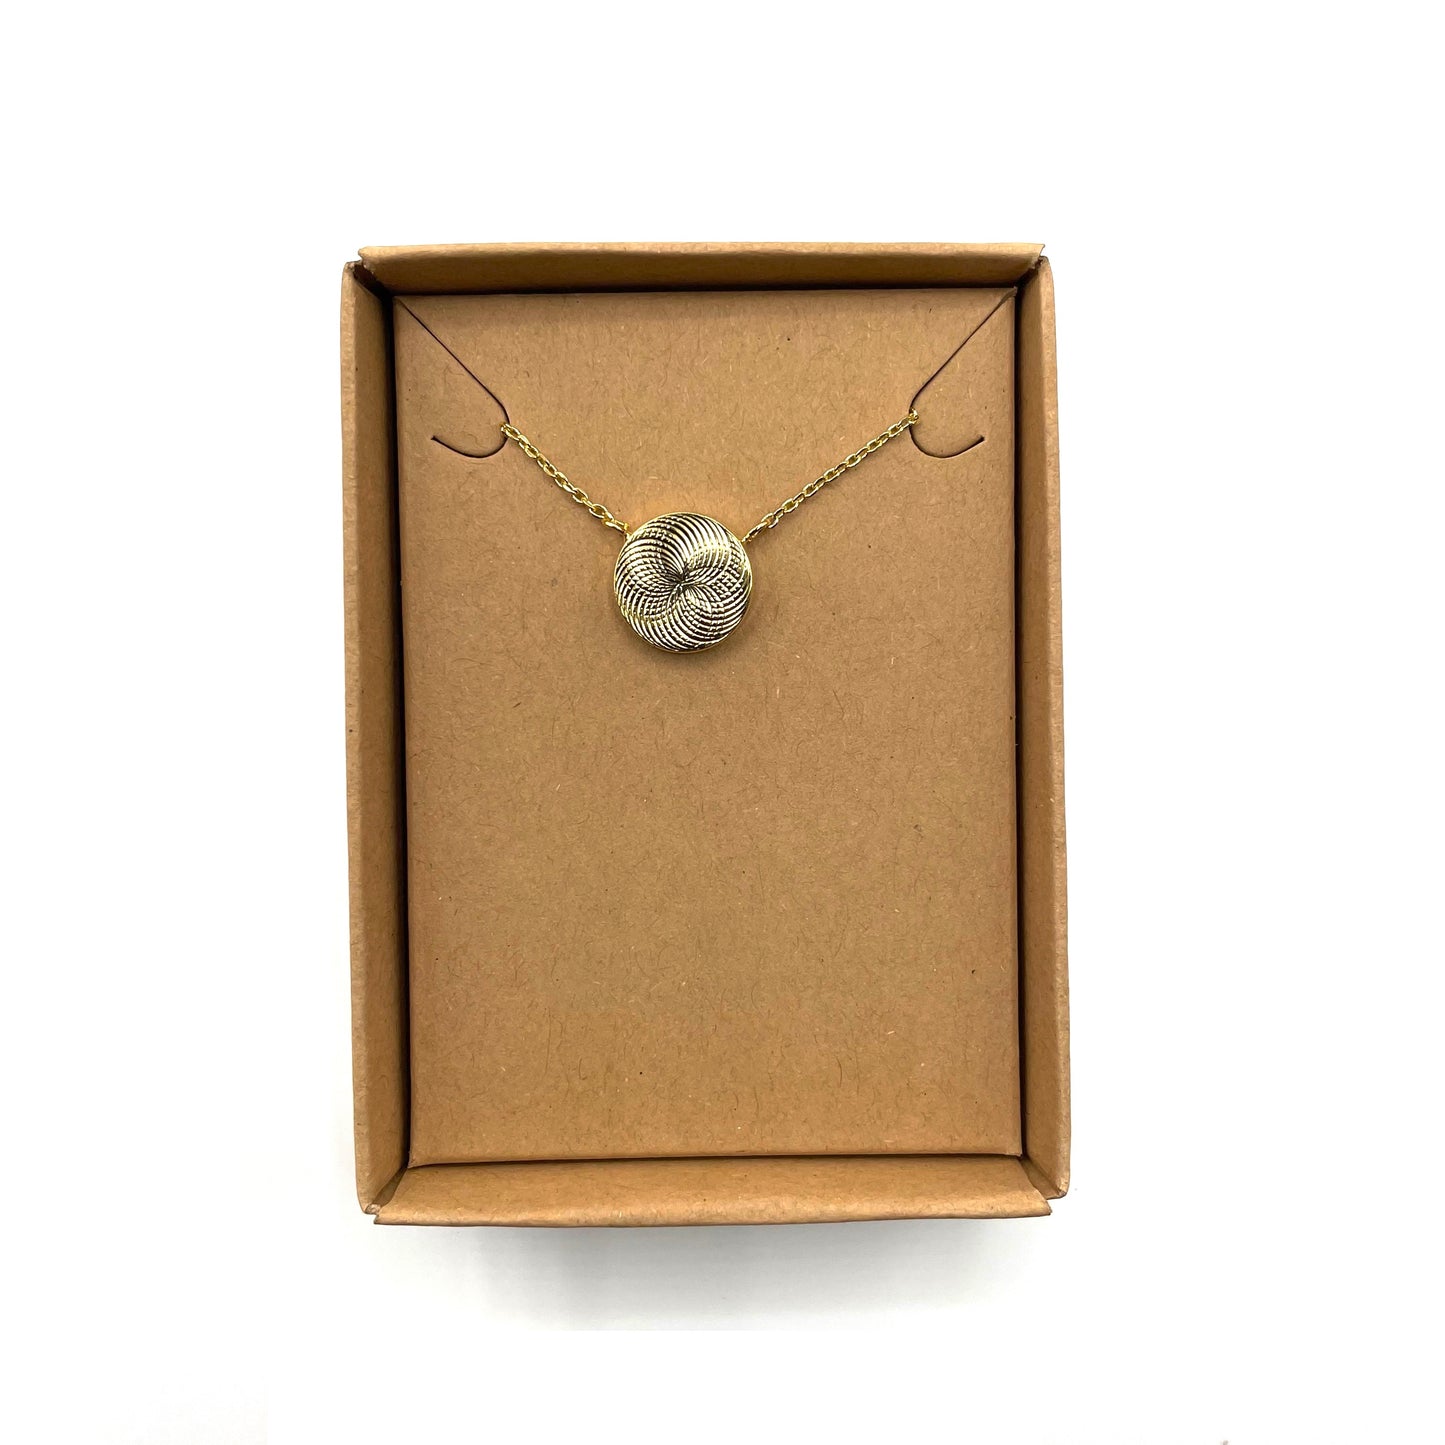 Spirograph pendant necklace